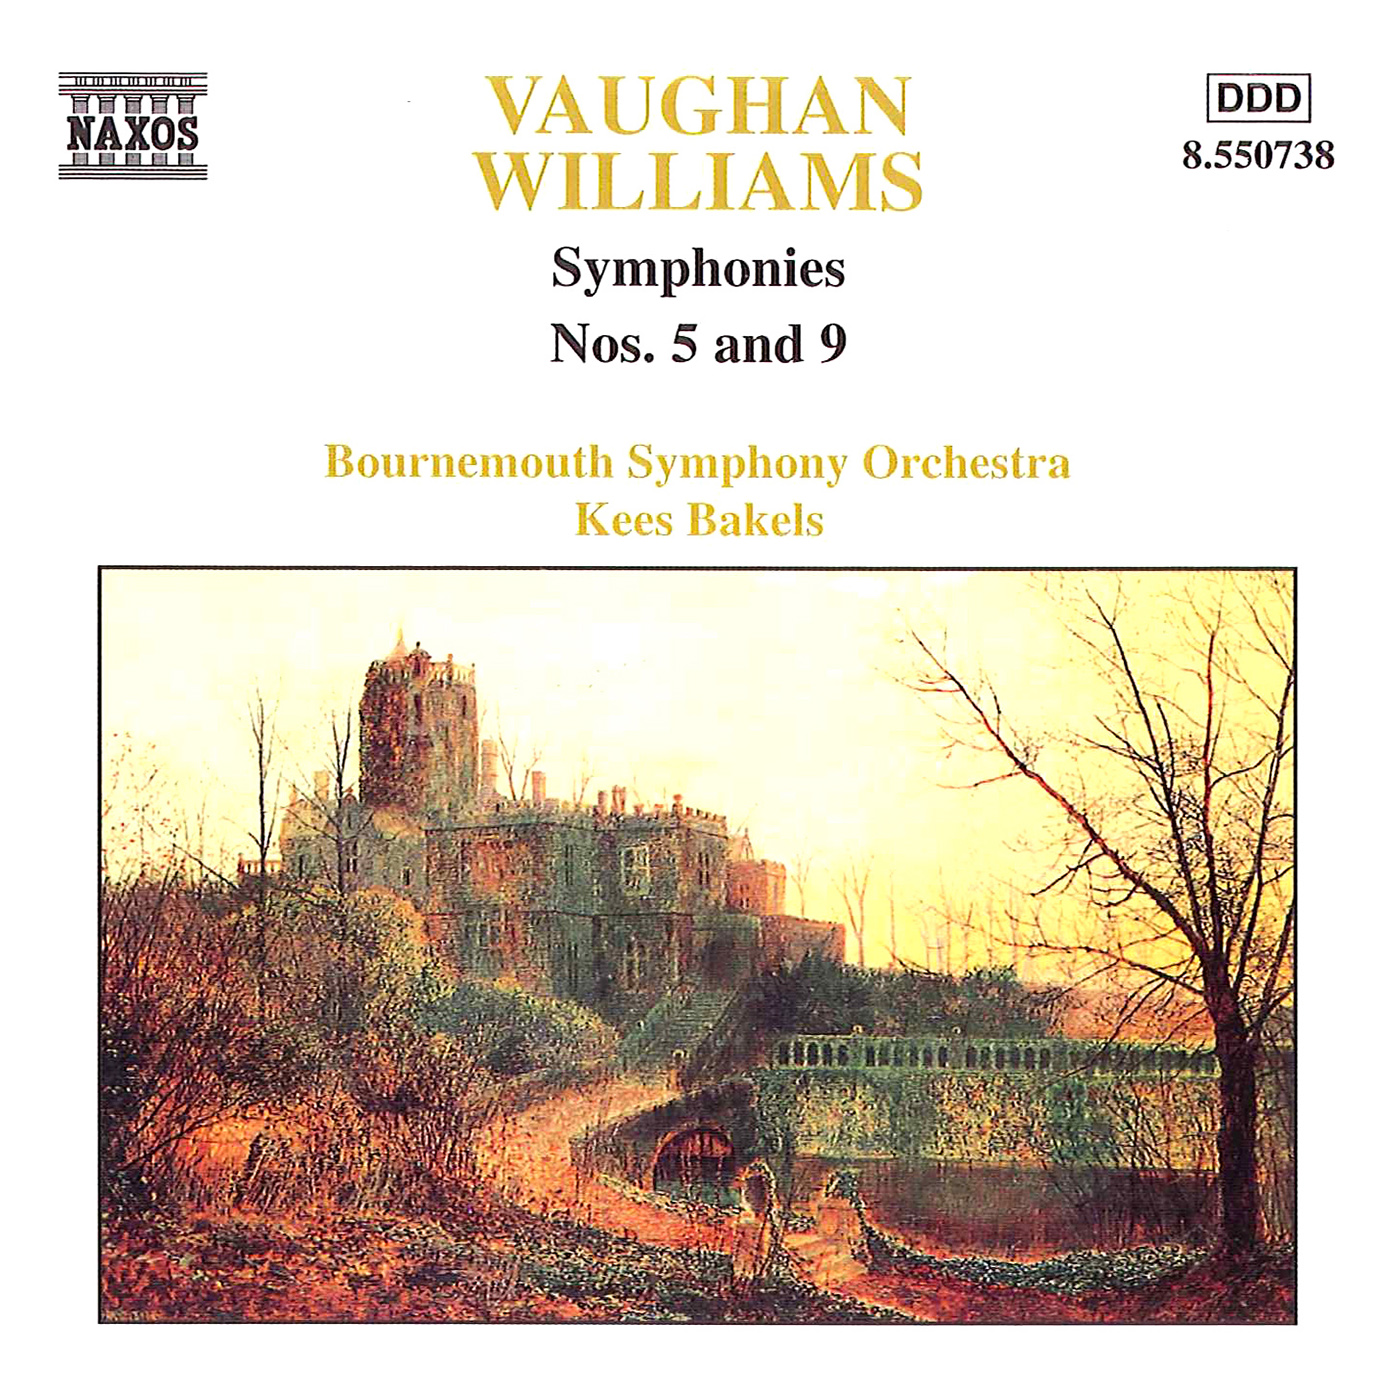 VAUGHAN WILLIAMS: Symphonies Nos. 5 and 9